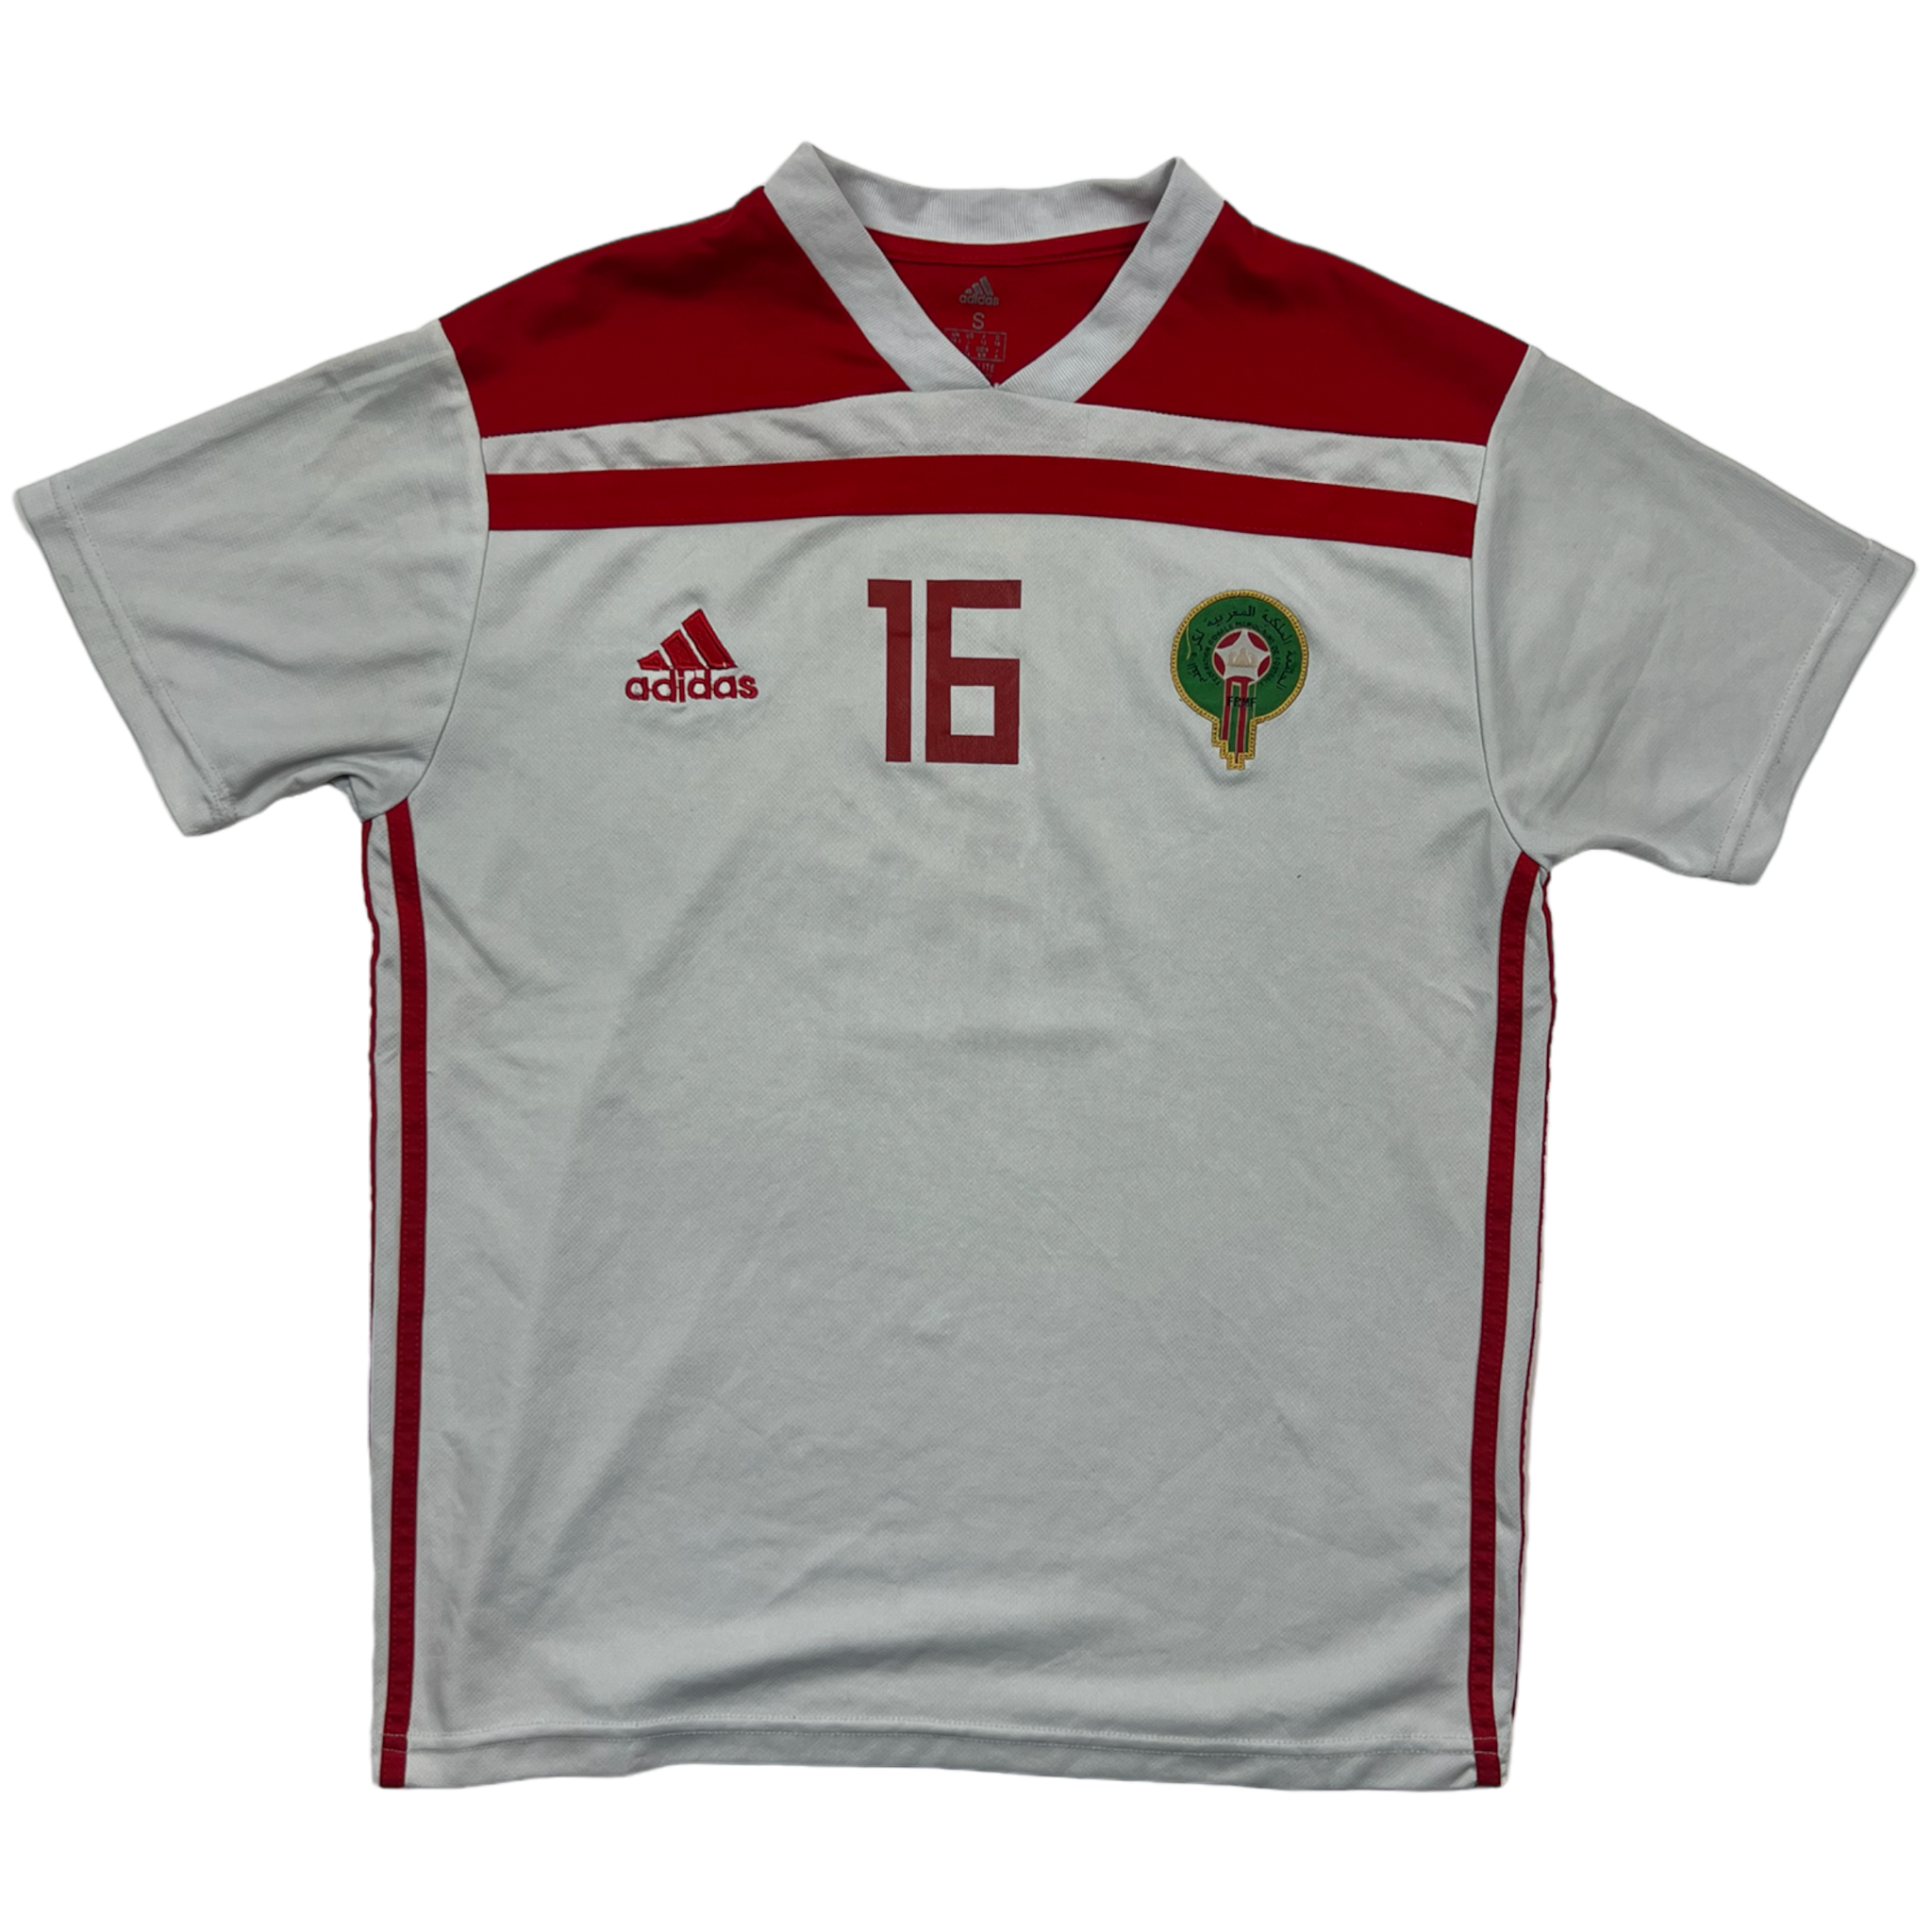 Adidas Morocco Jersey (S)